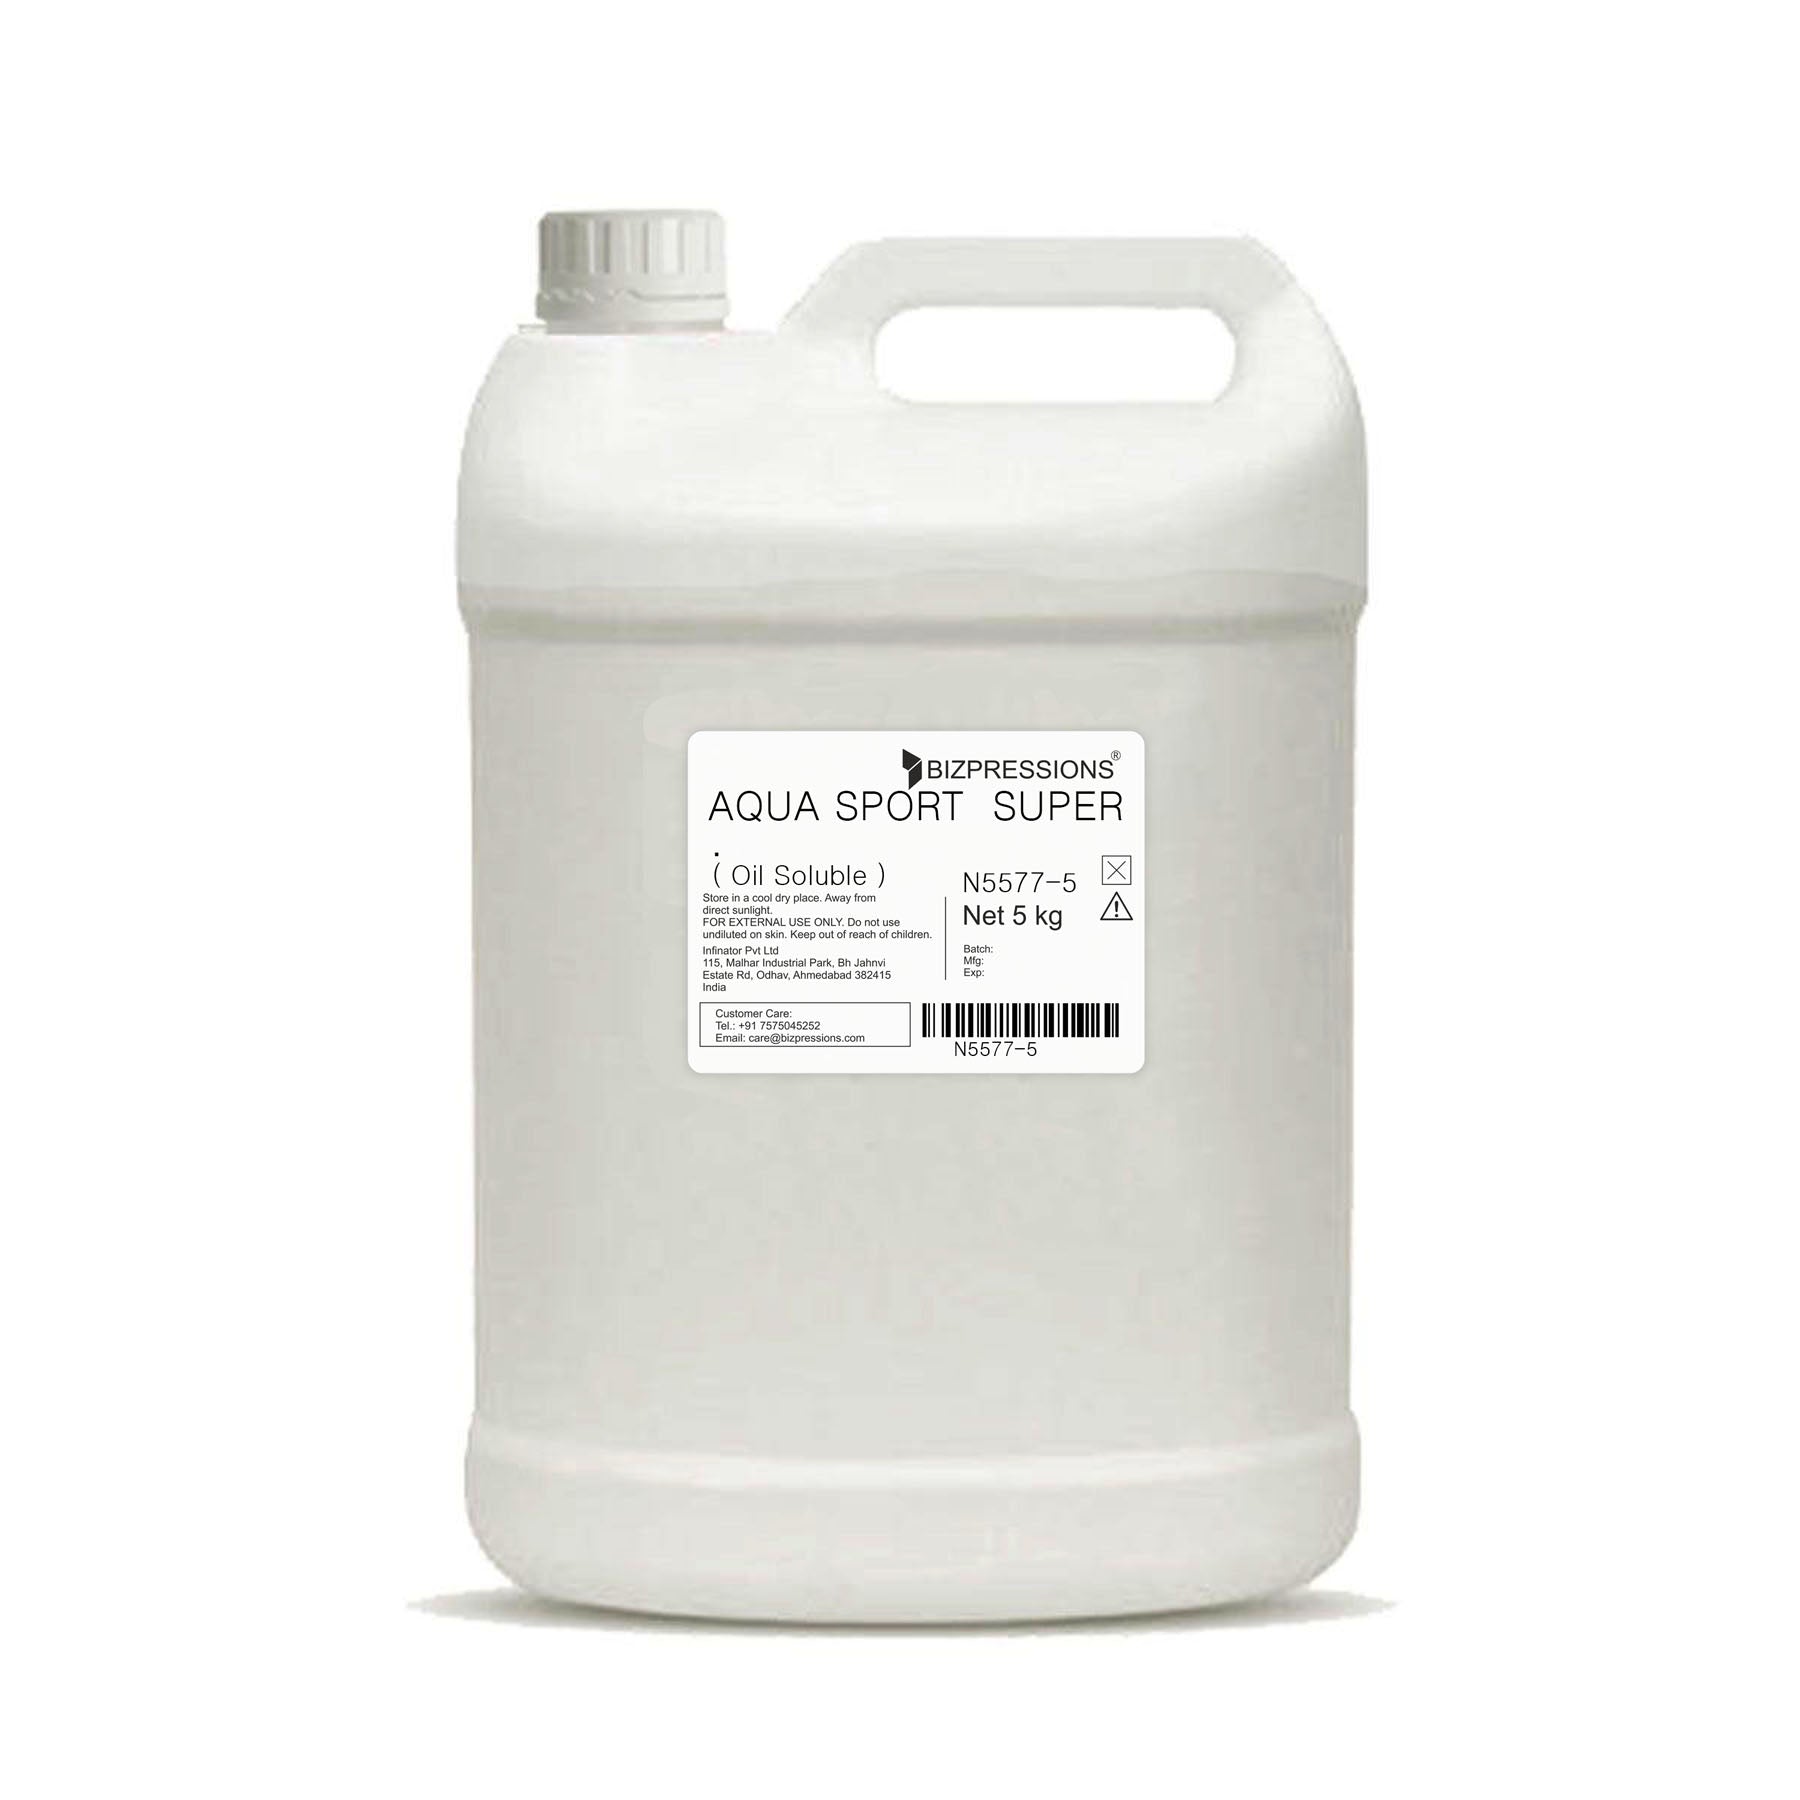 AQUA SPORT SUPER - Fragrance ( Oil Soluble ) - 5 kg